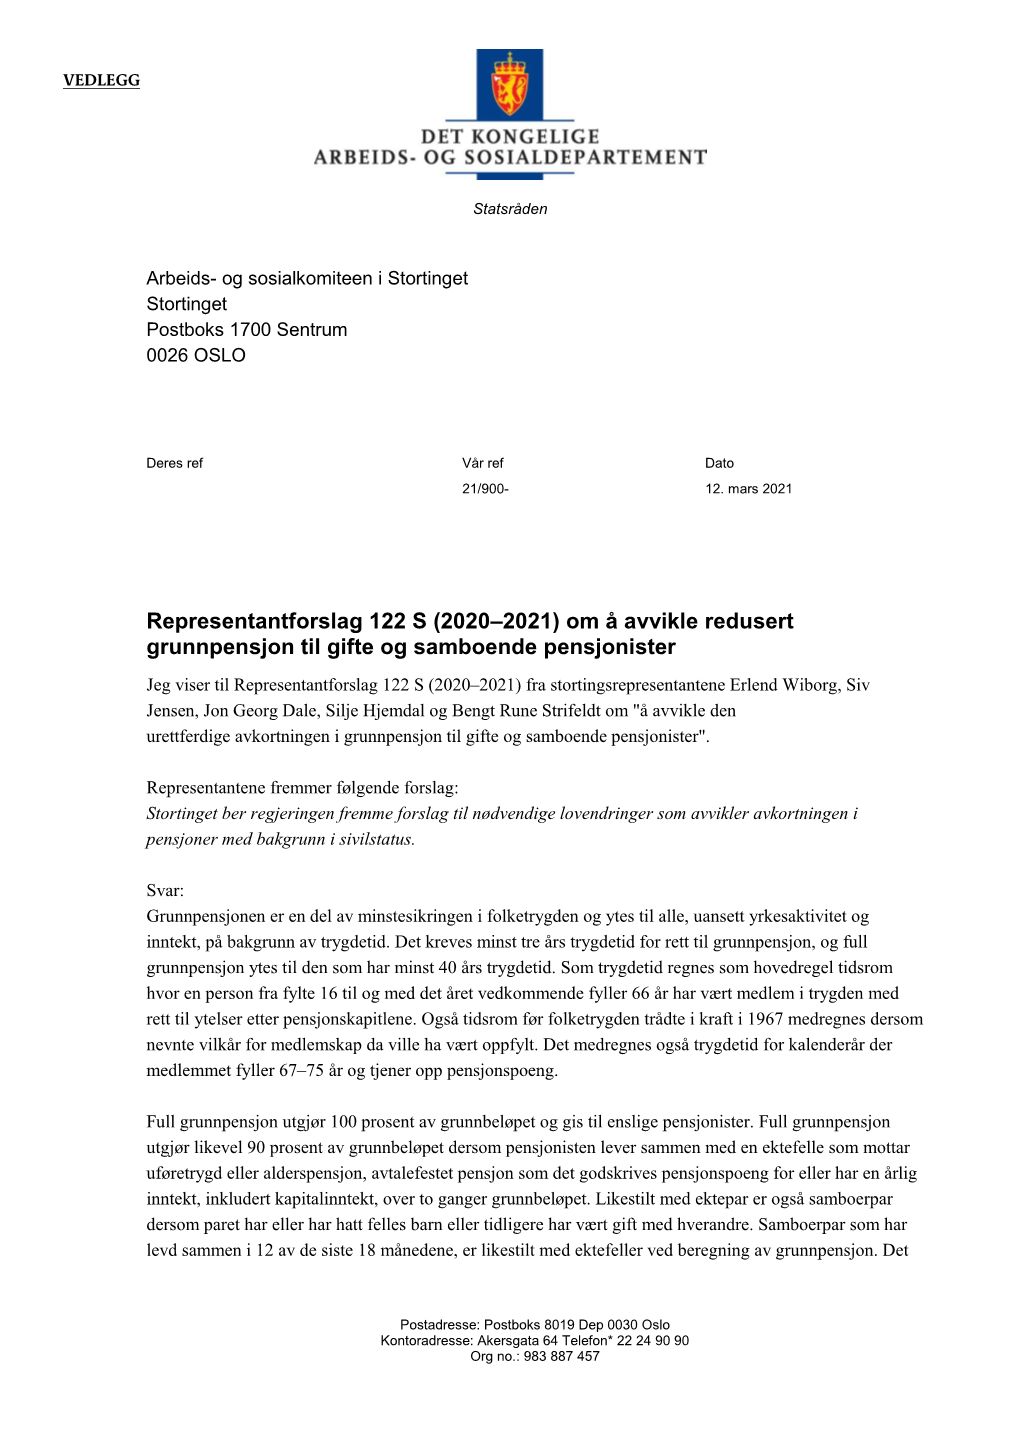 Representantforslag 122 S (2020-2021)